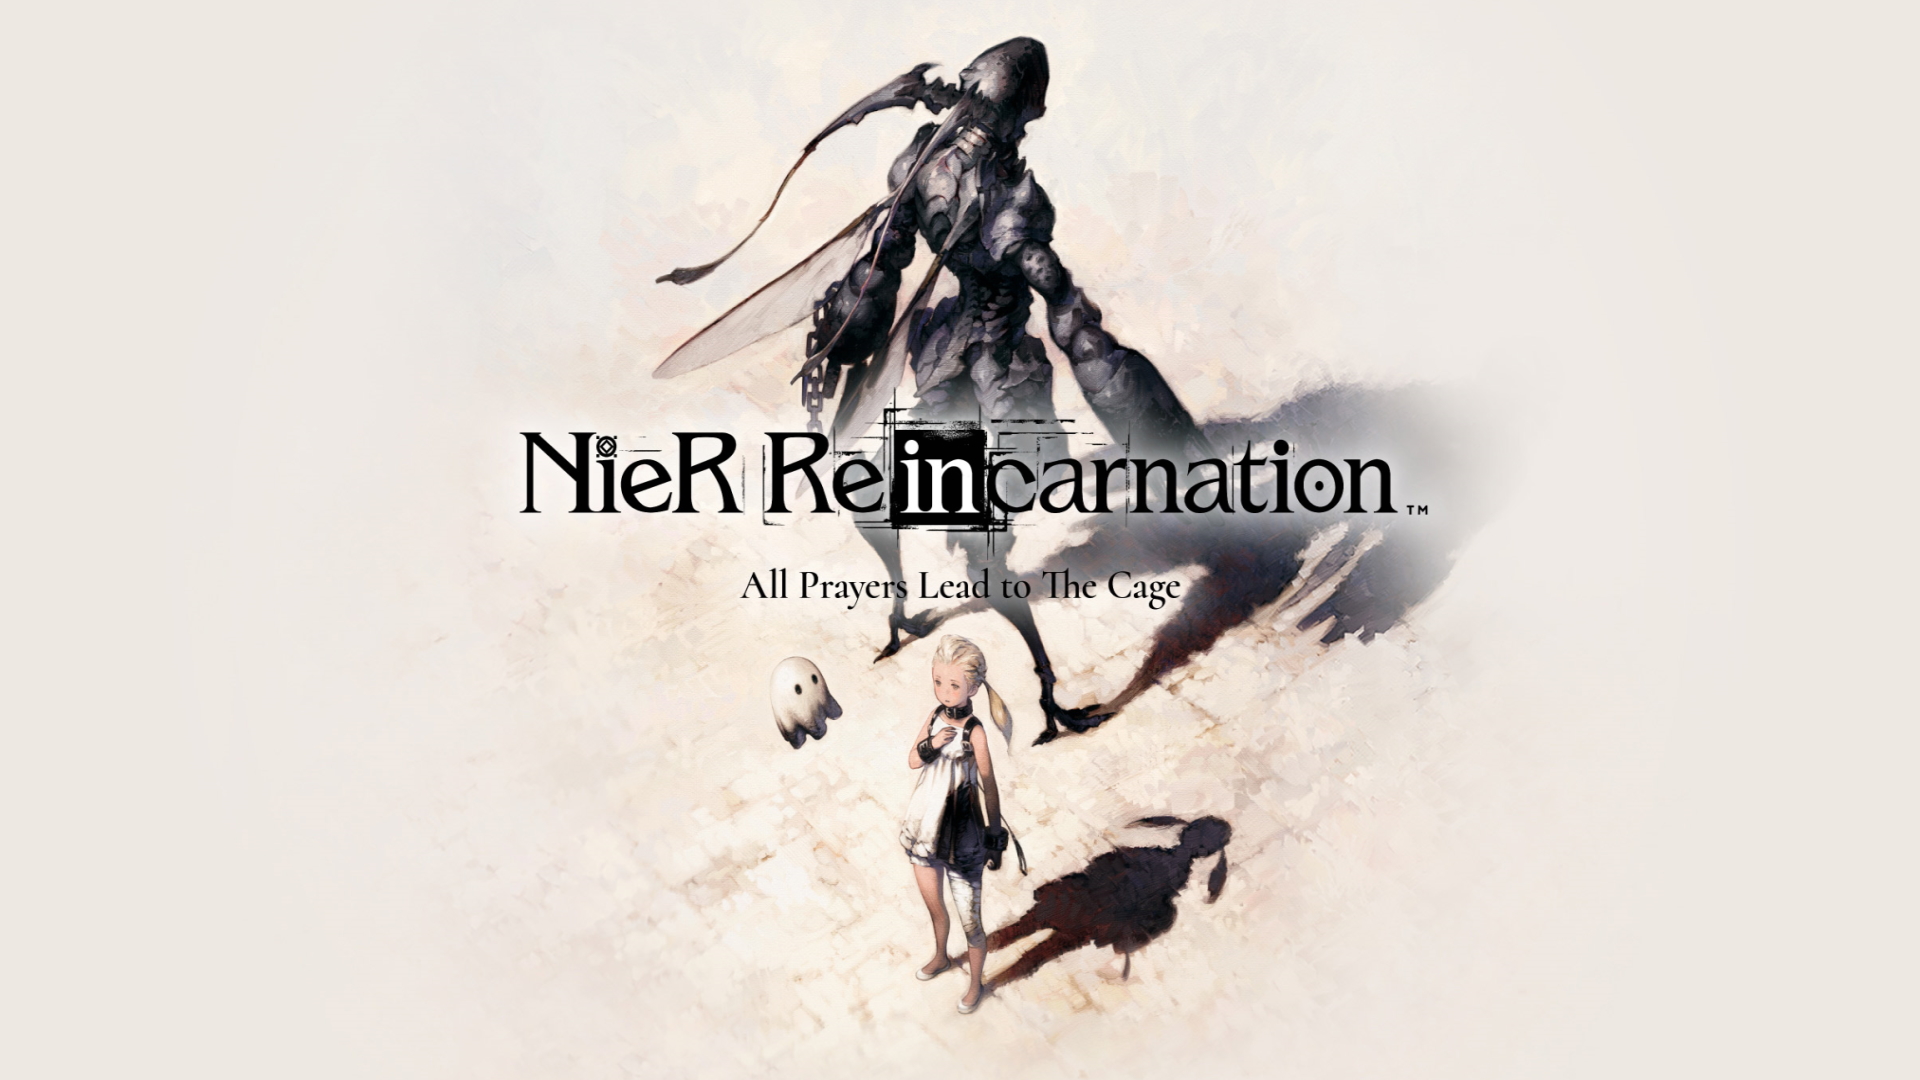 Select Nier Reincarnation